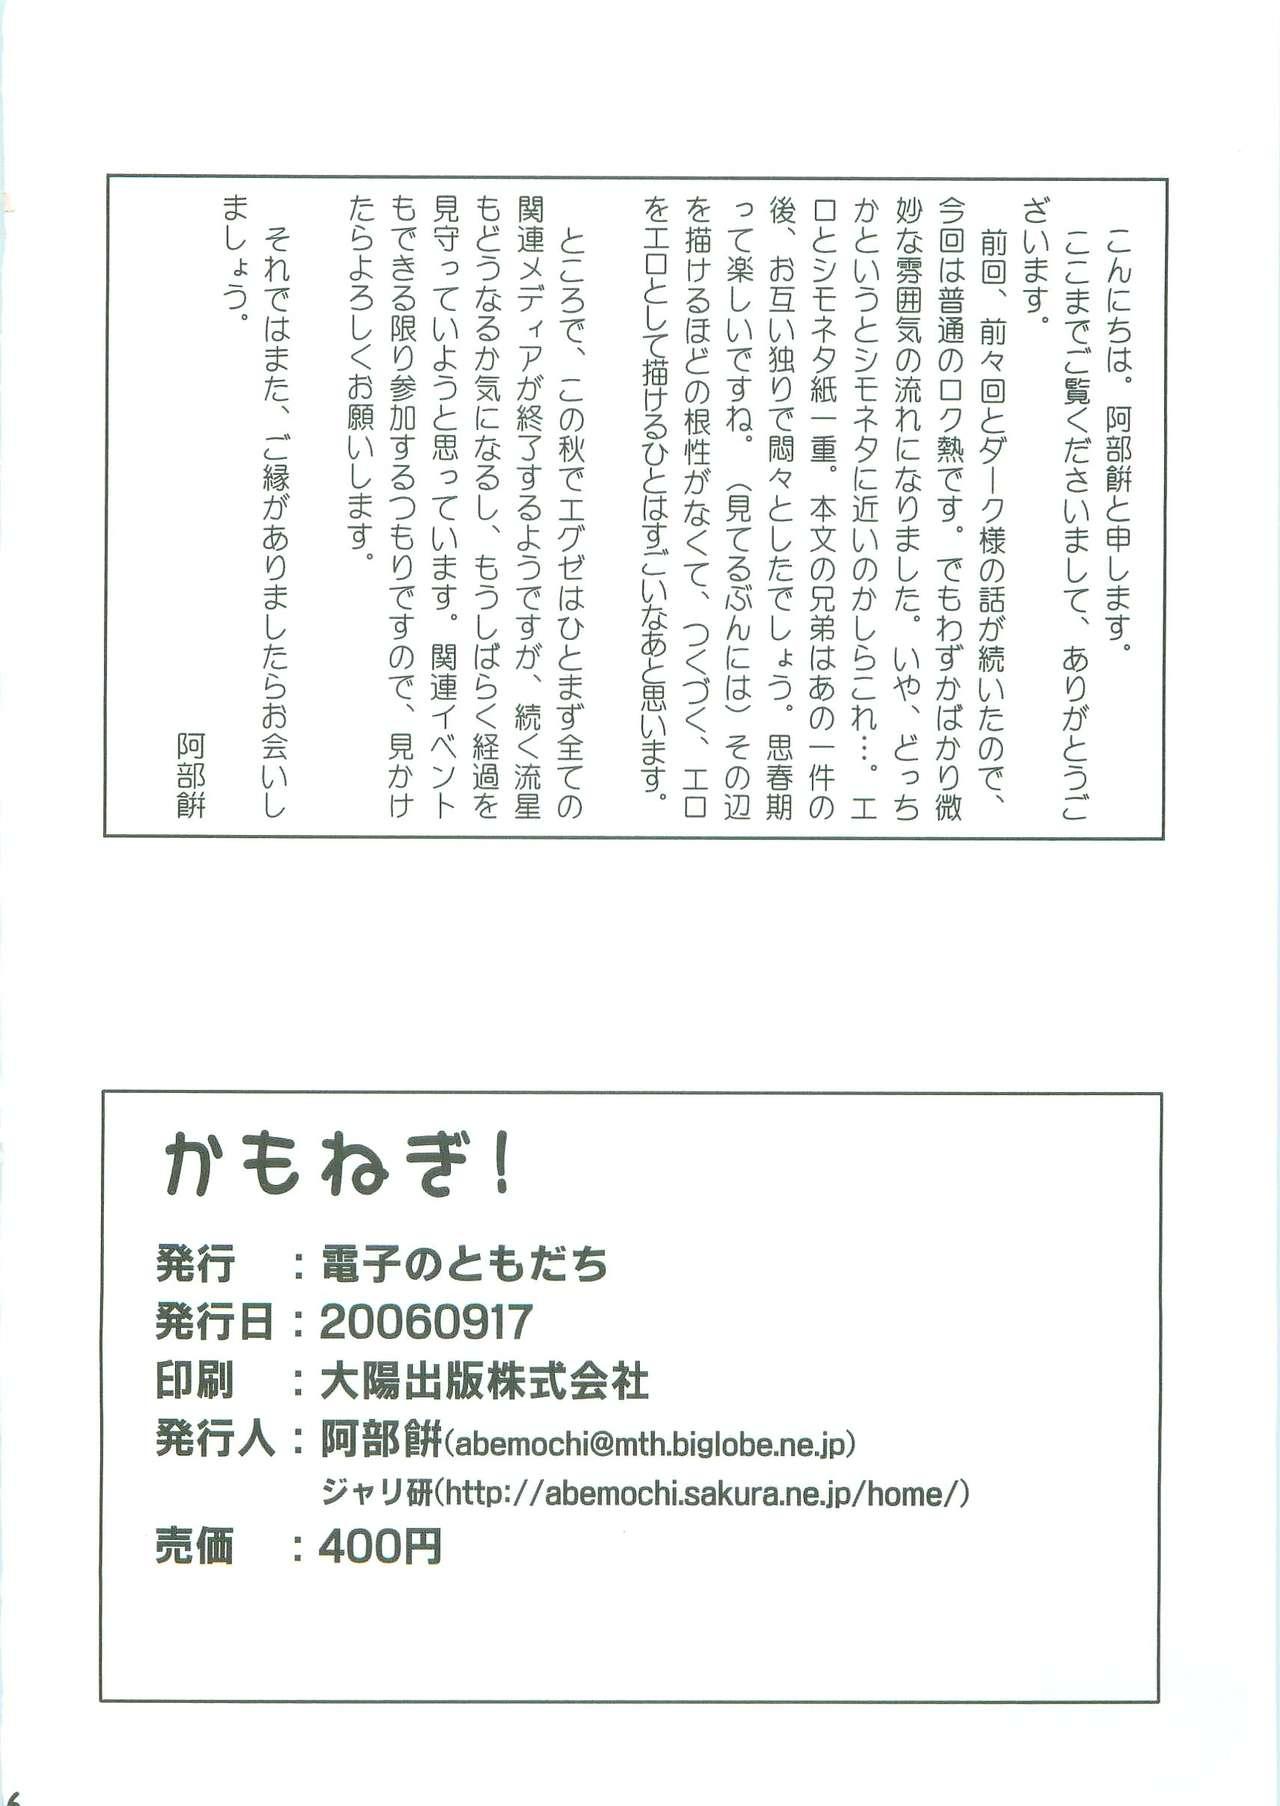 Gozando Kamonegi! (Rockman.EXE)/abemochi - Megaman battle network | rockman.exe Hung - Page 24